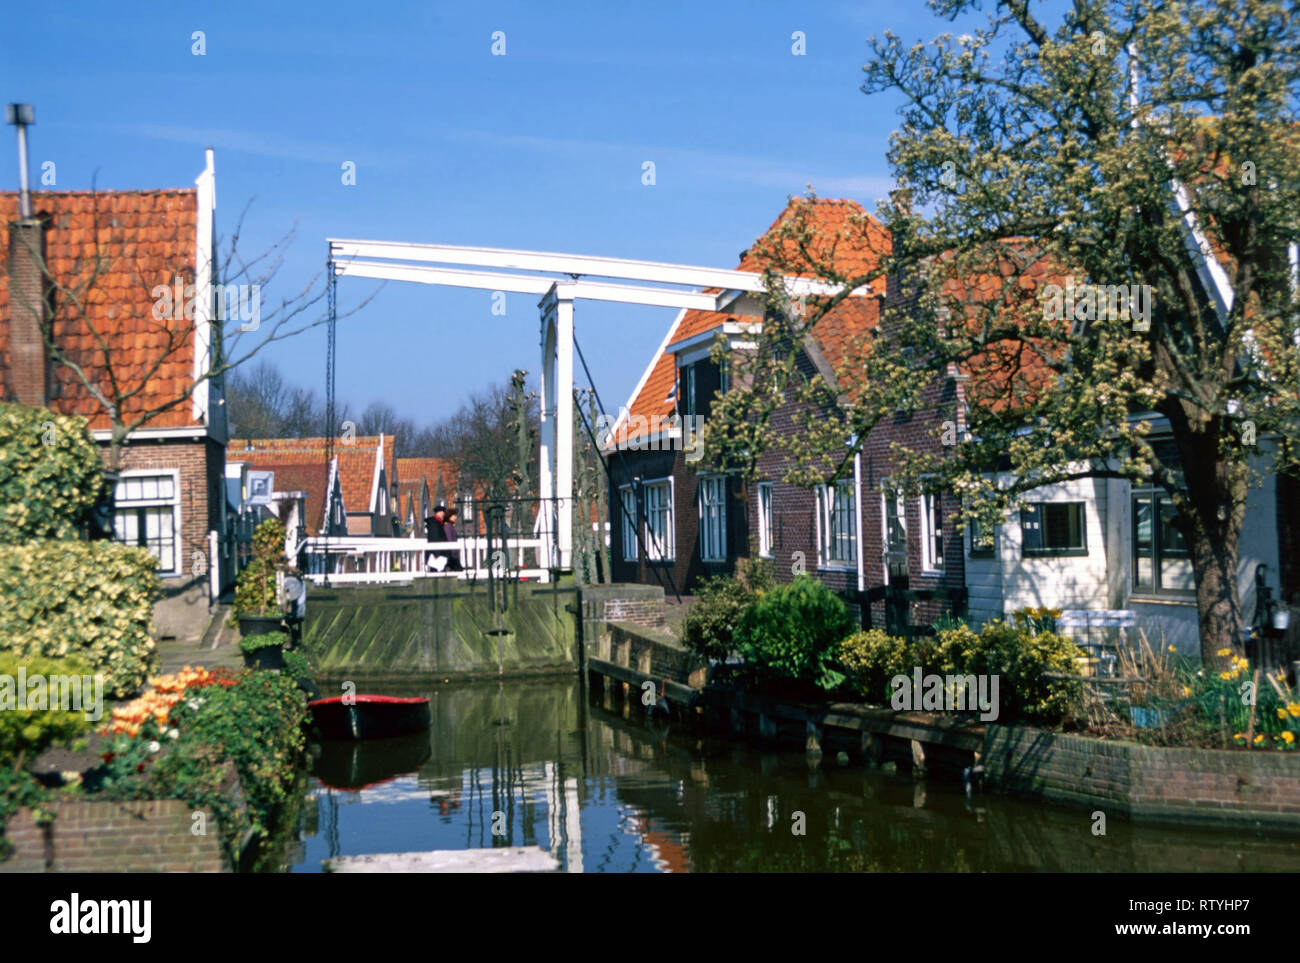 Baanbrug,a cantilever bridge,Edam,Netherlands Stock Photo